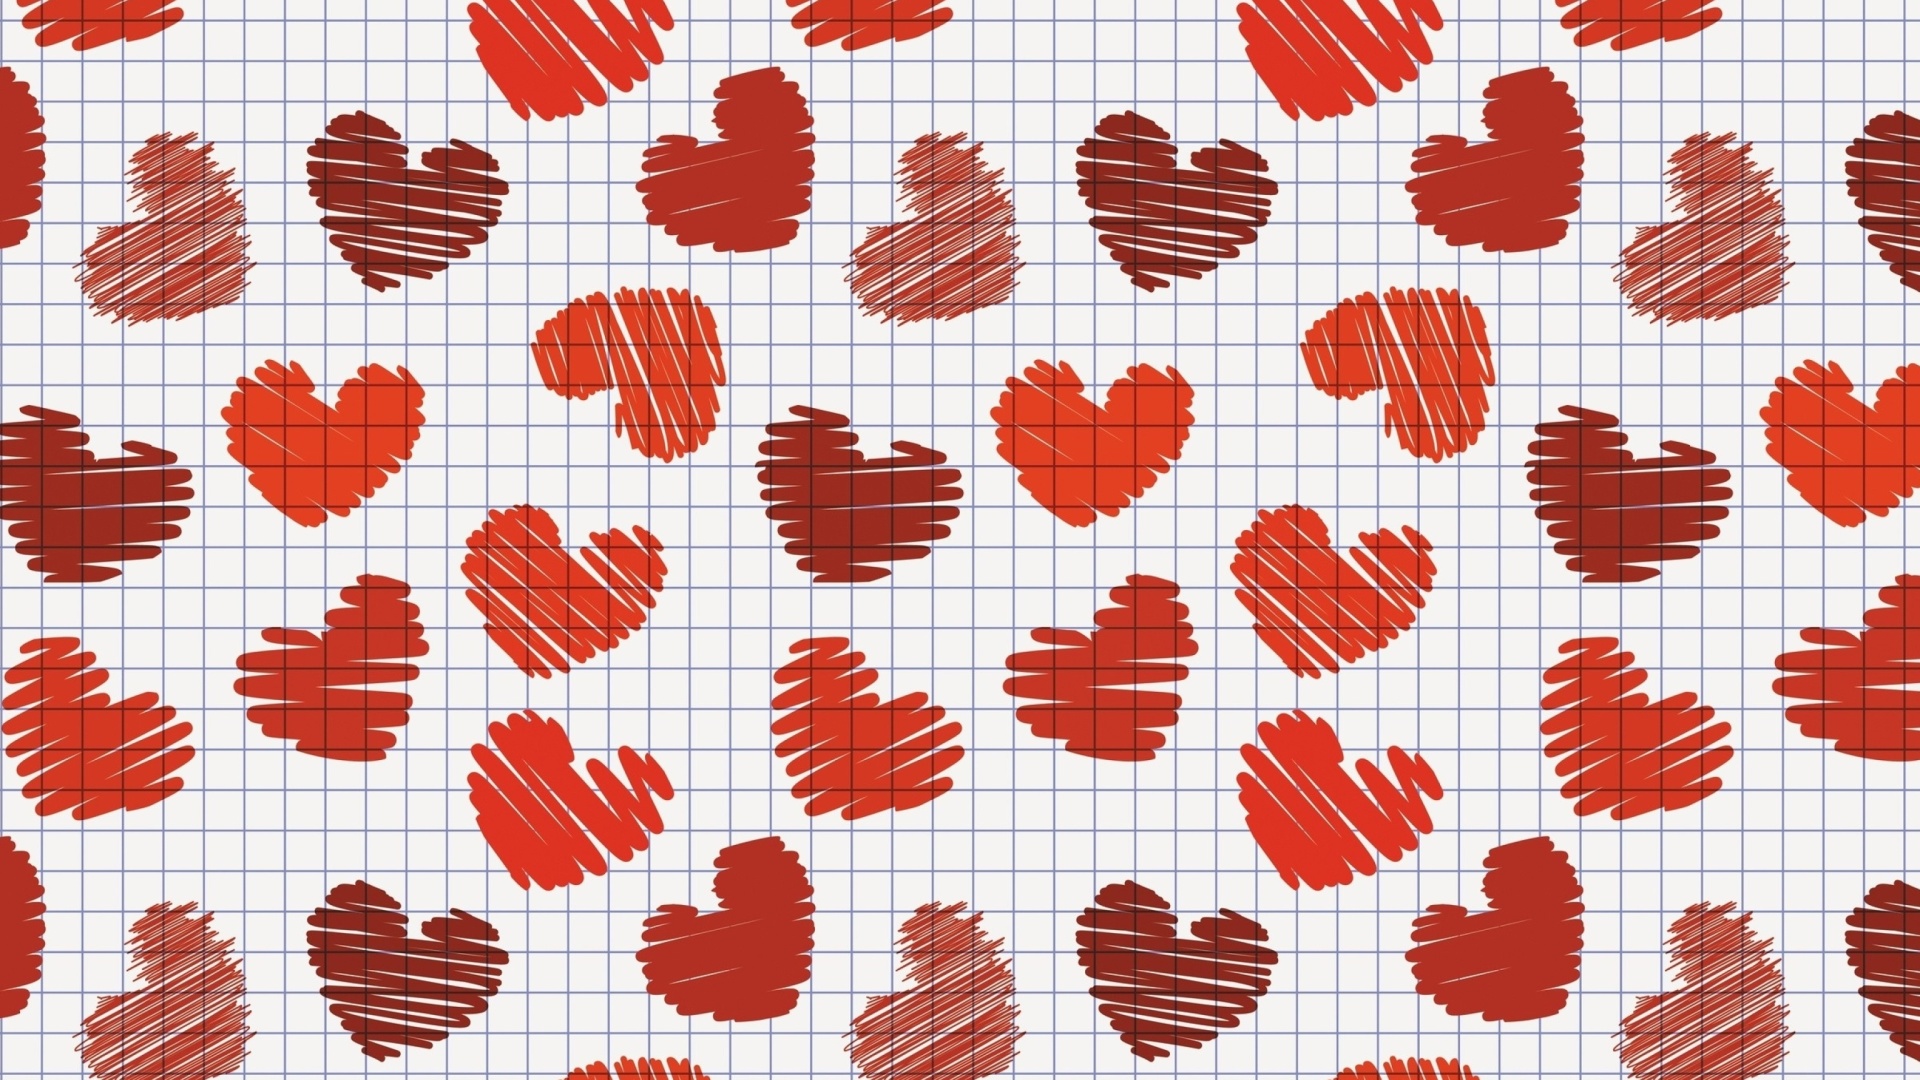 Drawn Hearts Texture wallpaper 1920x1080